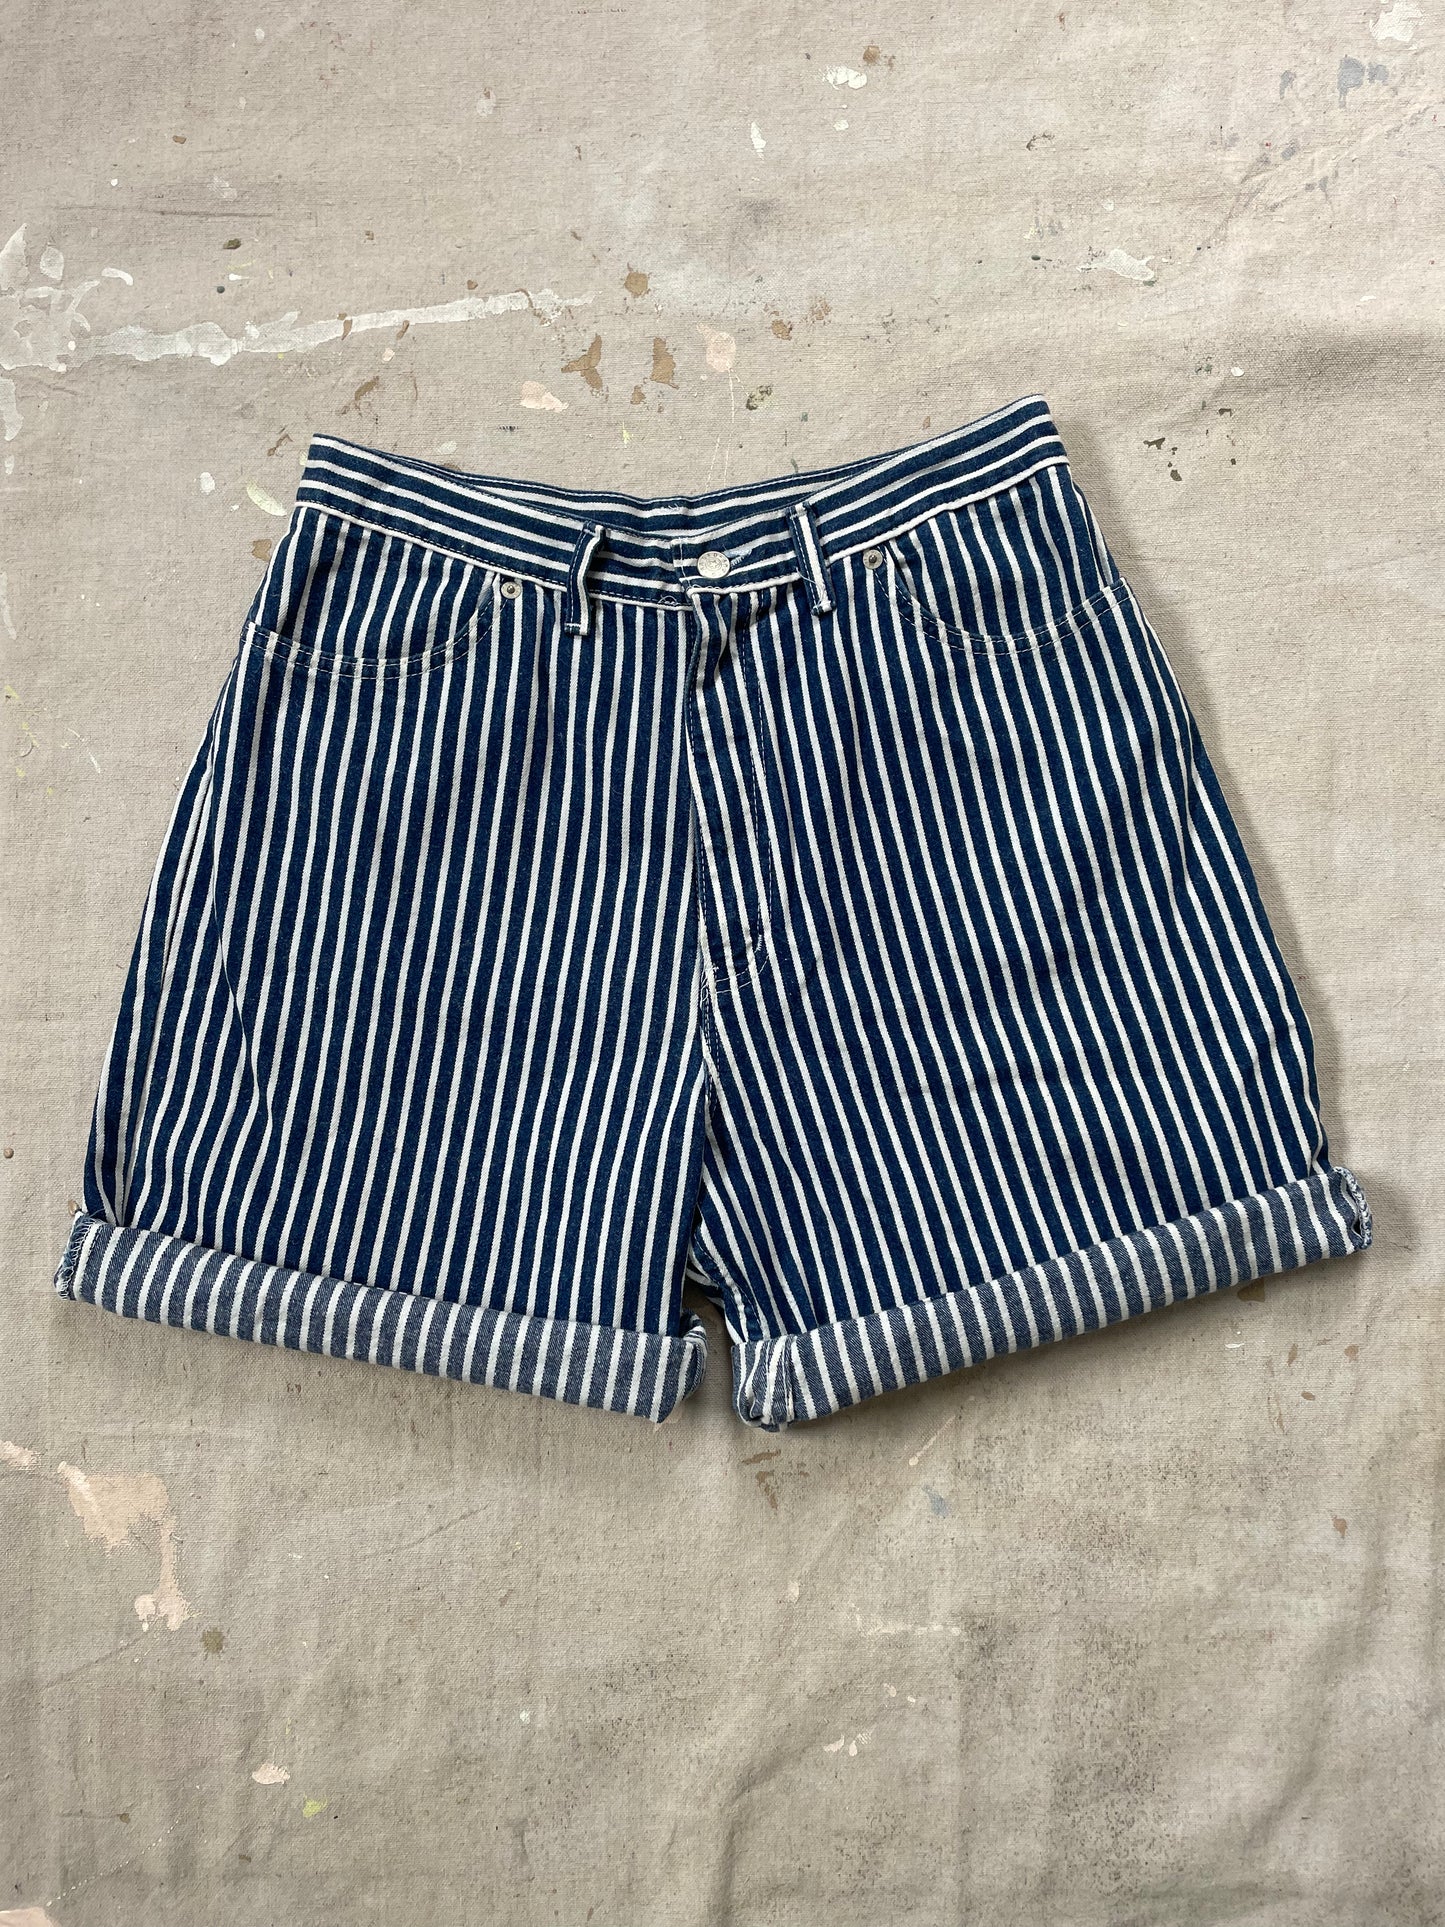 90s Striped Jean Shorts